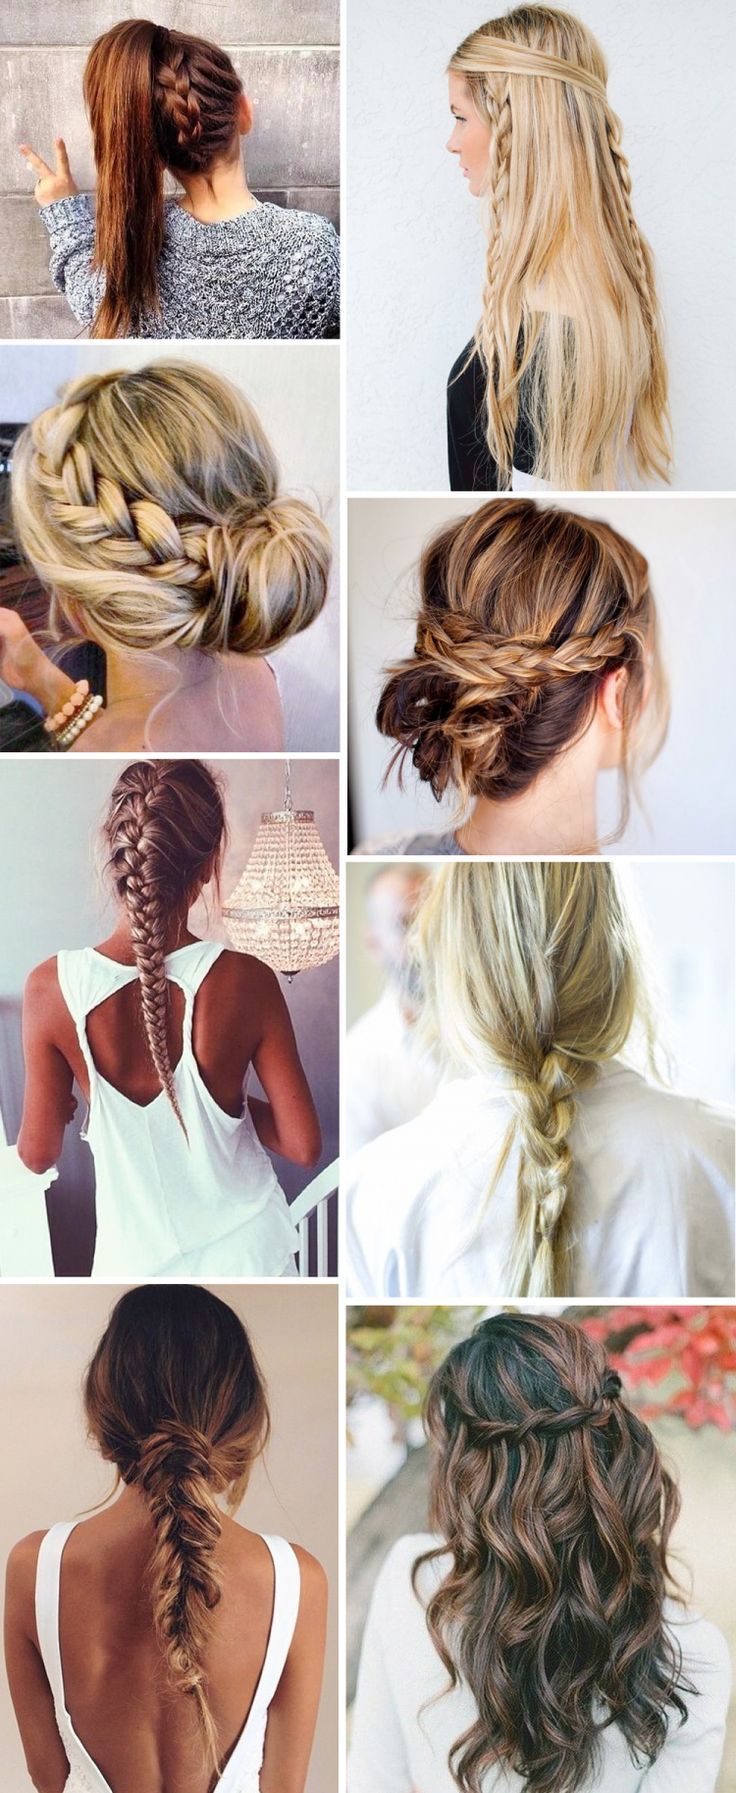 Lovely braids (Christina Dueholm)